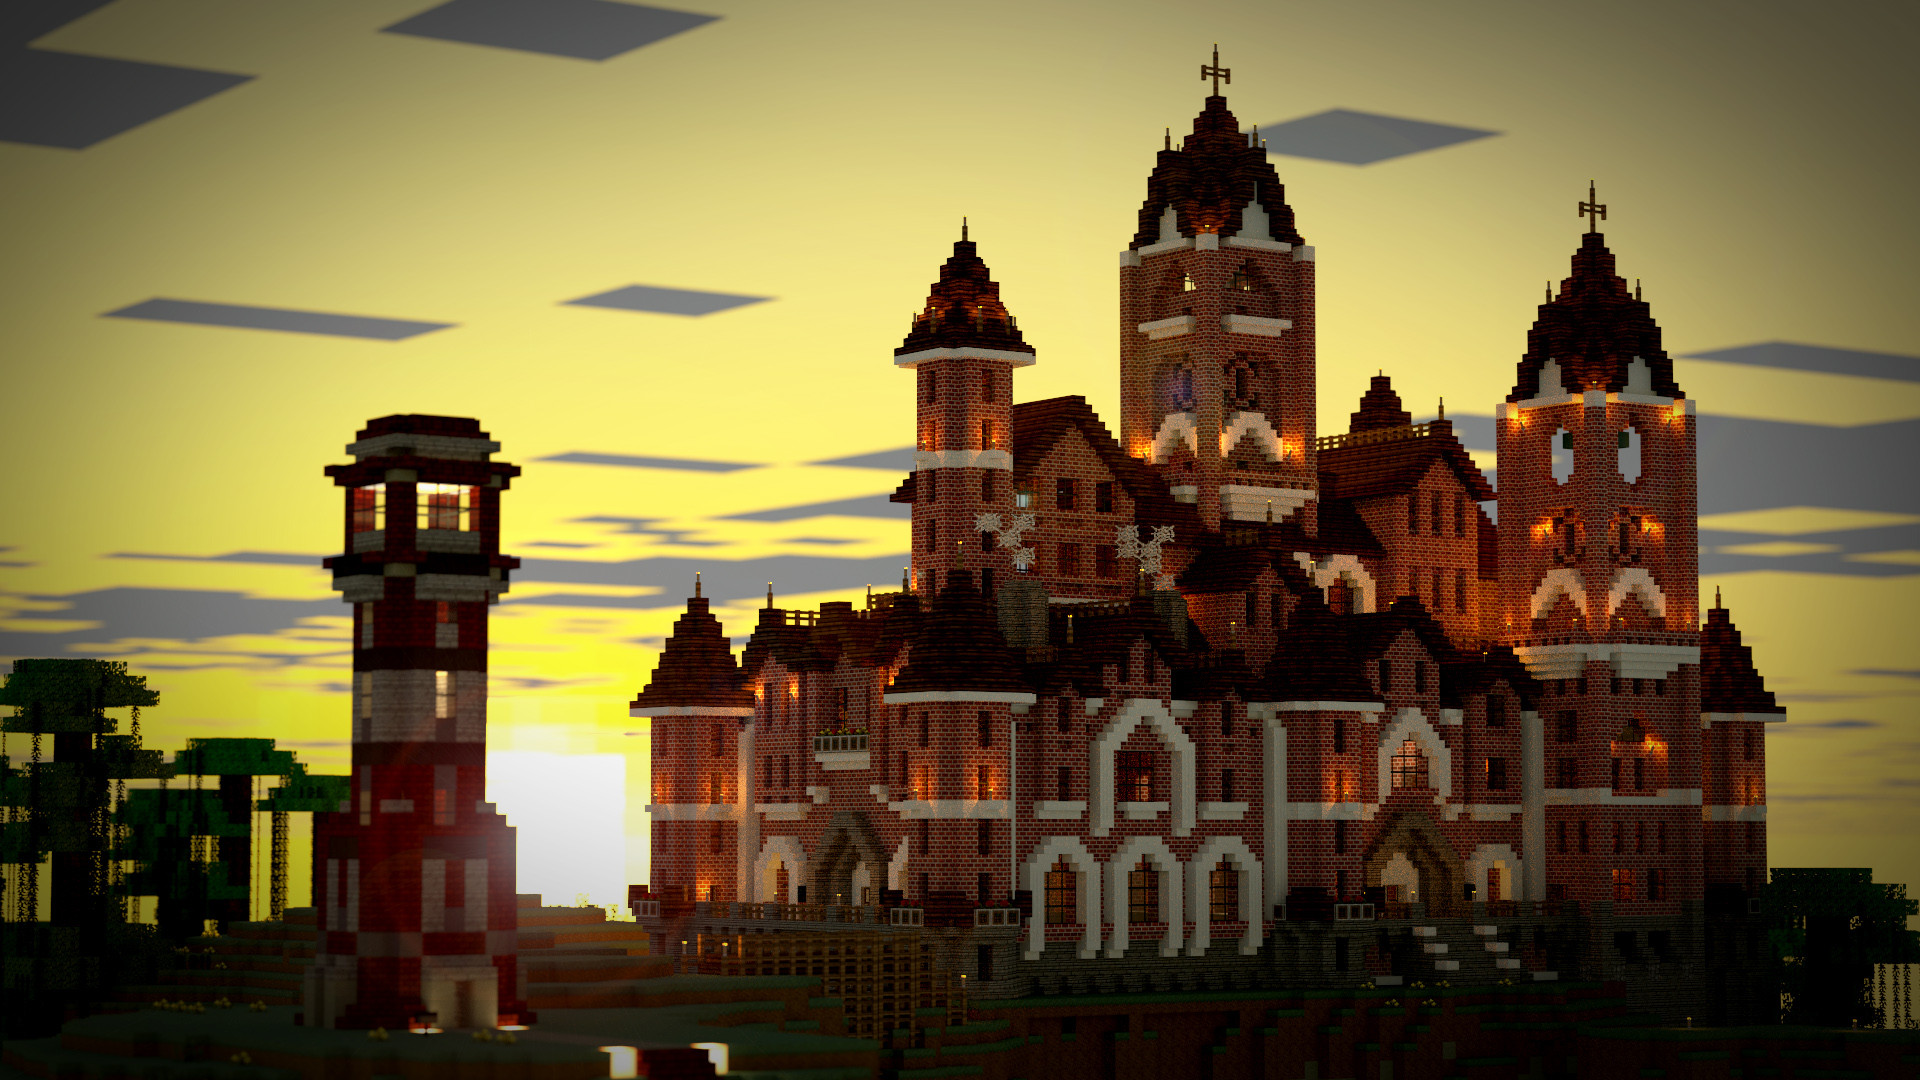 Château Minecraft et son phare Wallpaper Image